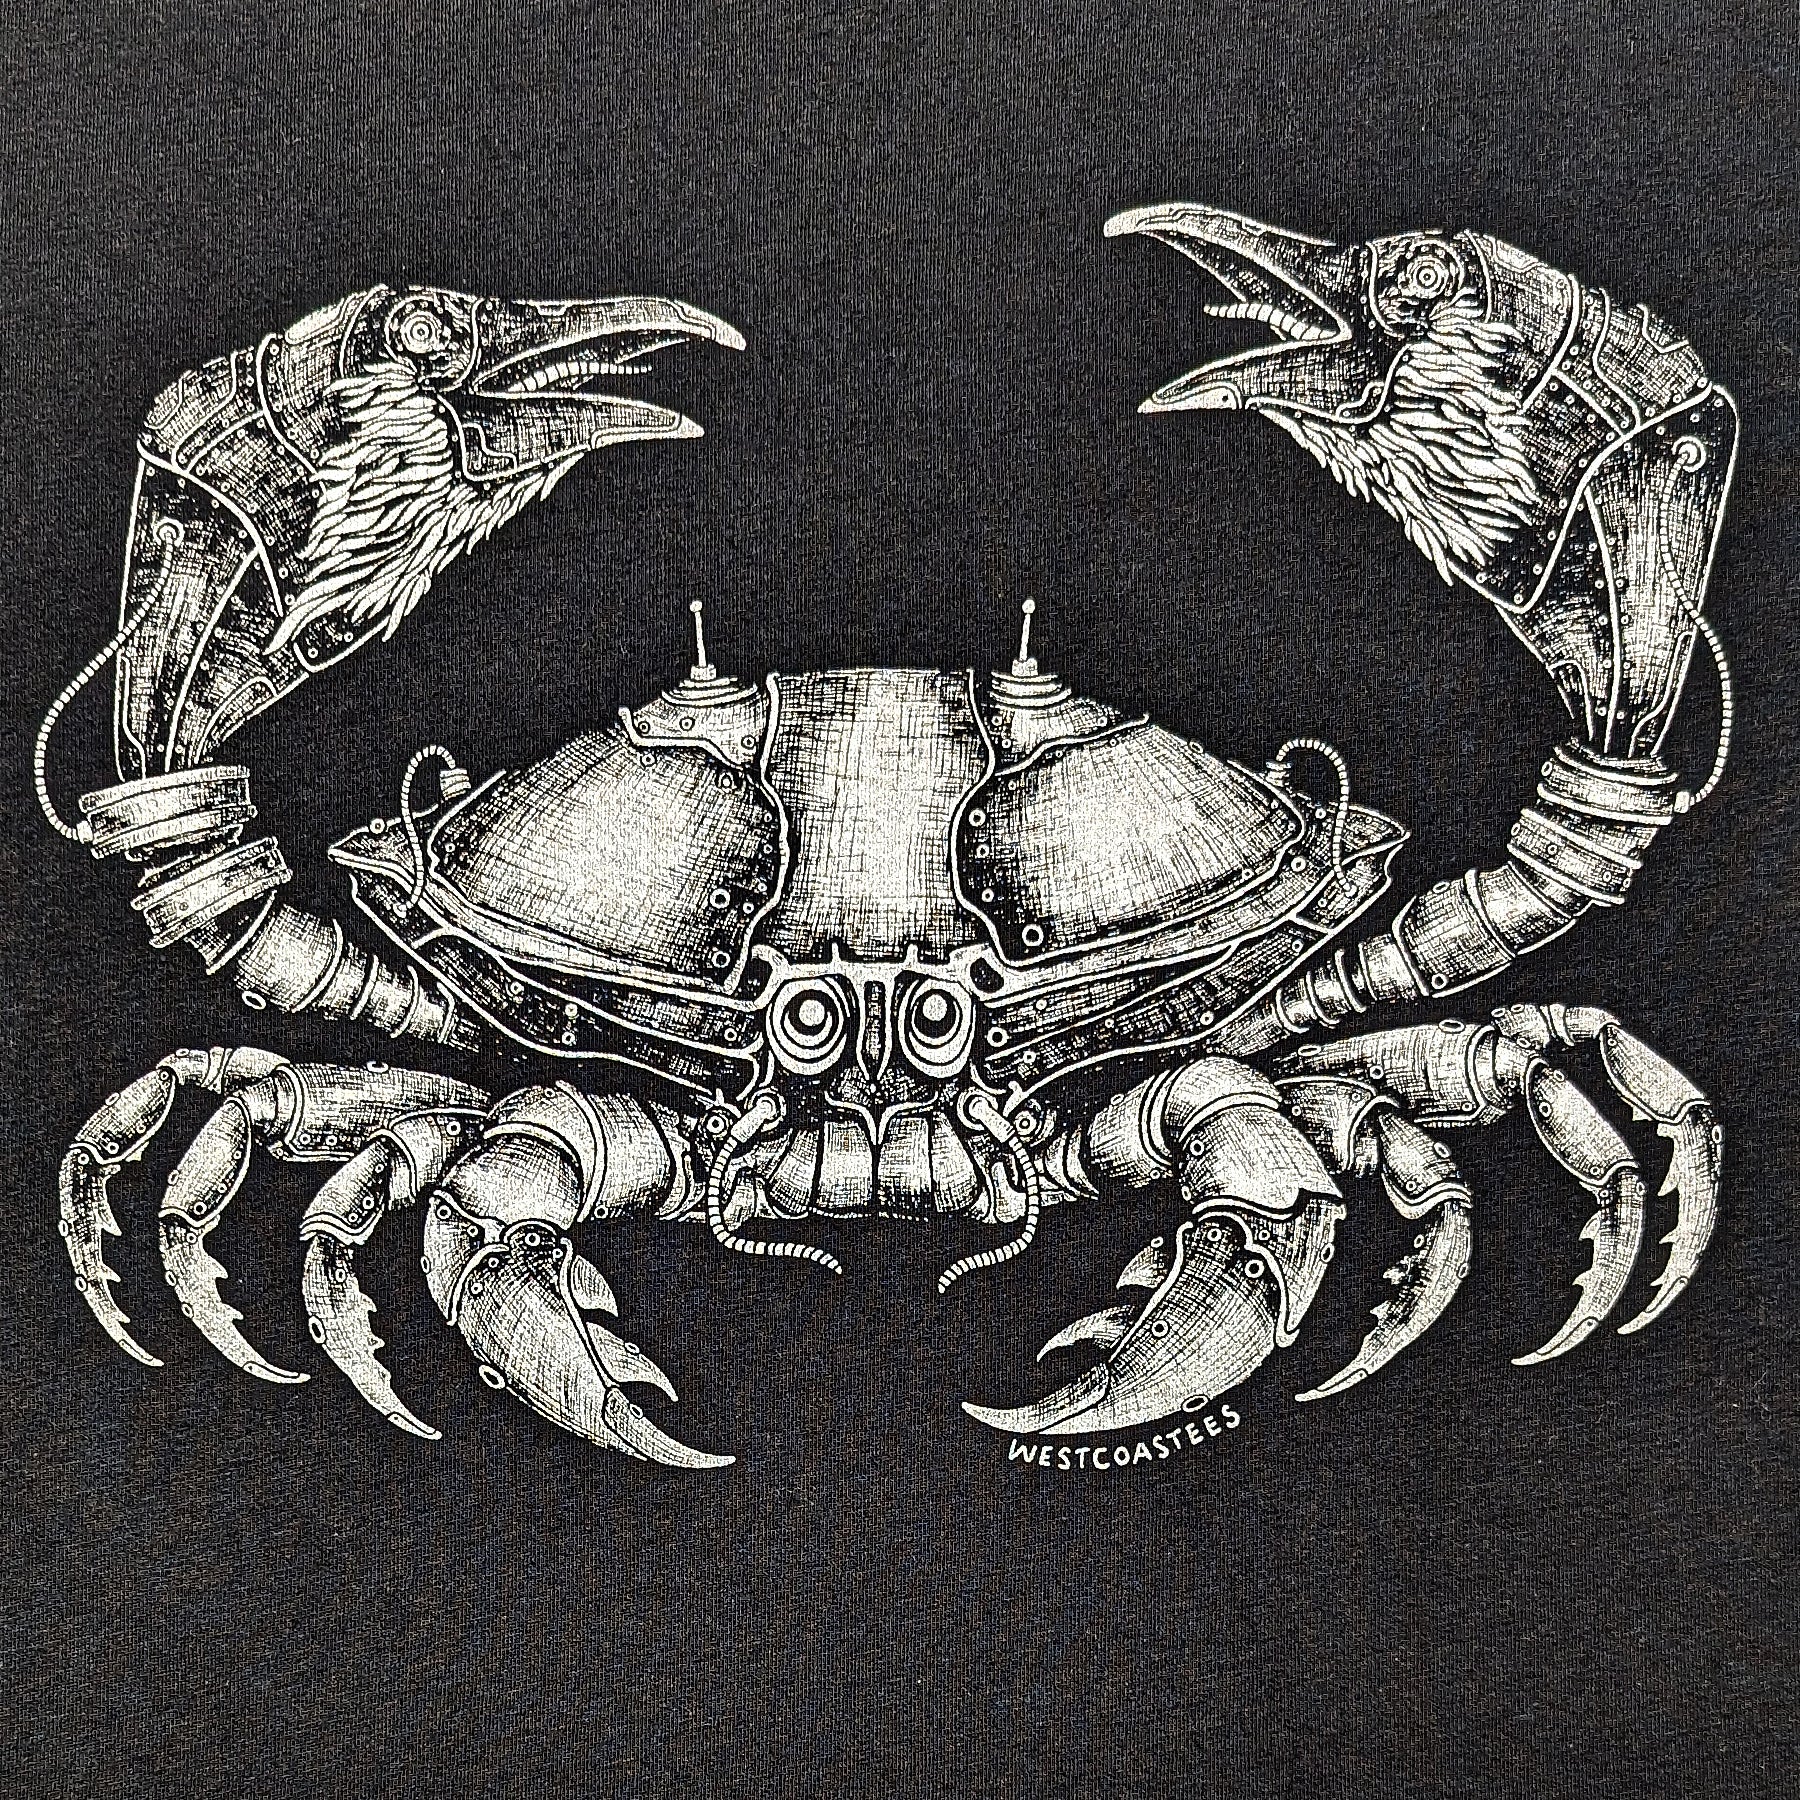 Adult Unisex Steampunk Crab t-shirt